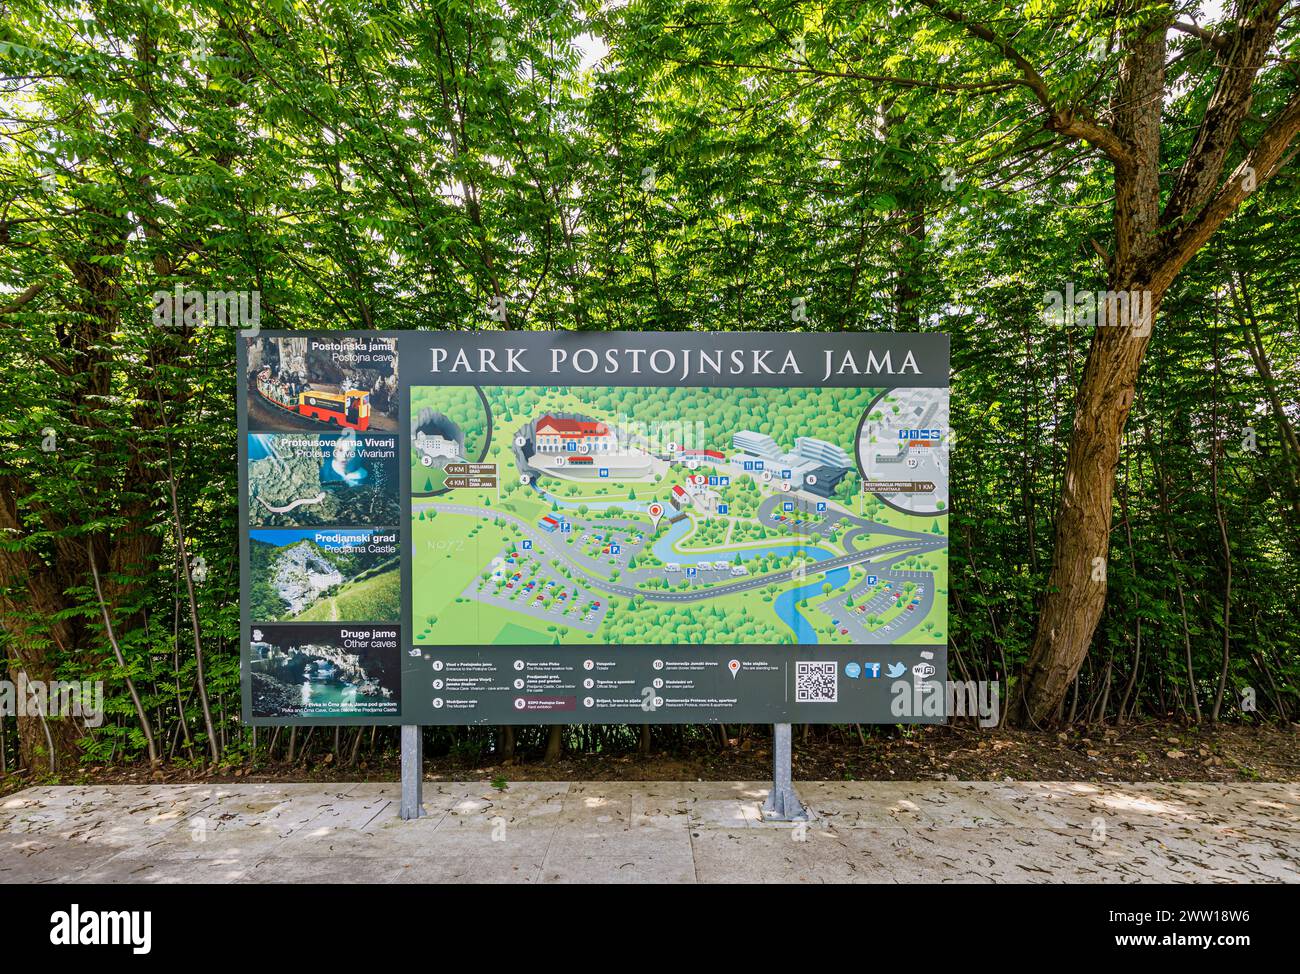 Map guide at the entrance to Postojnska Jama (Postojna Cave Park), an iconic limestone karst cave system in Slovenia, central & eastern Europe Stock Photo